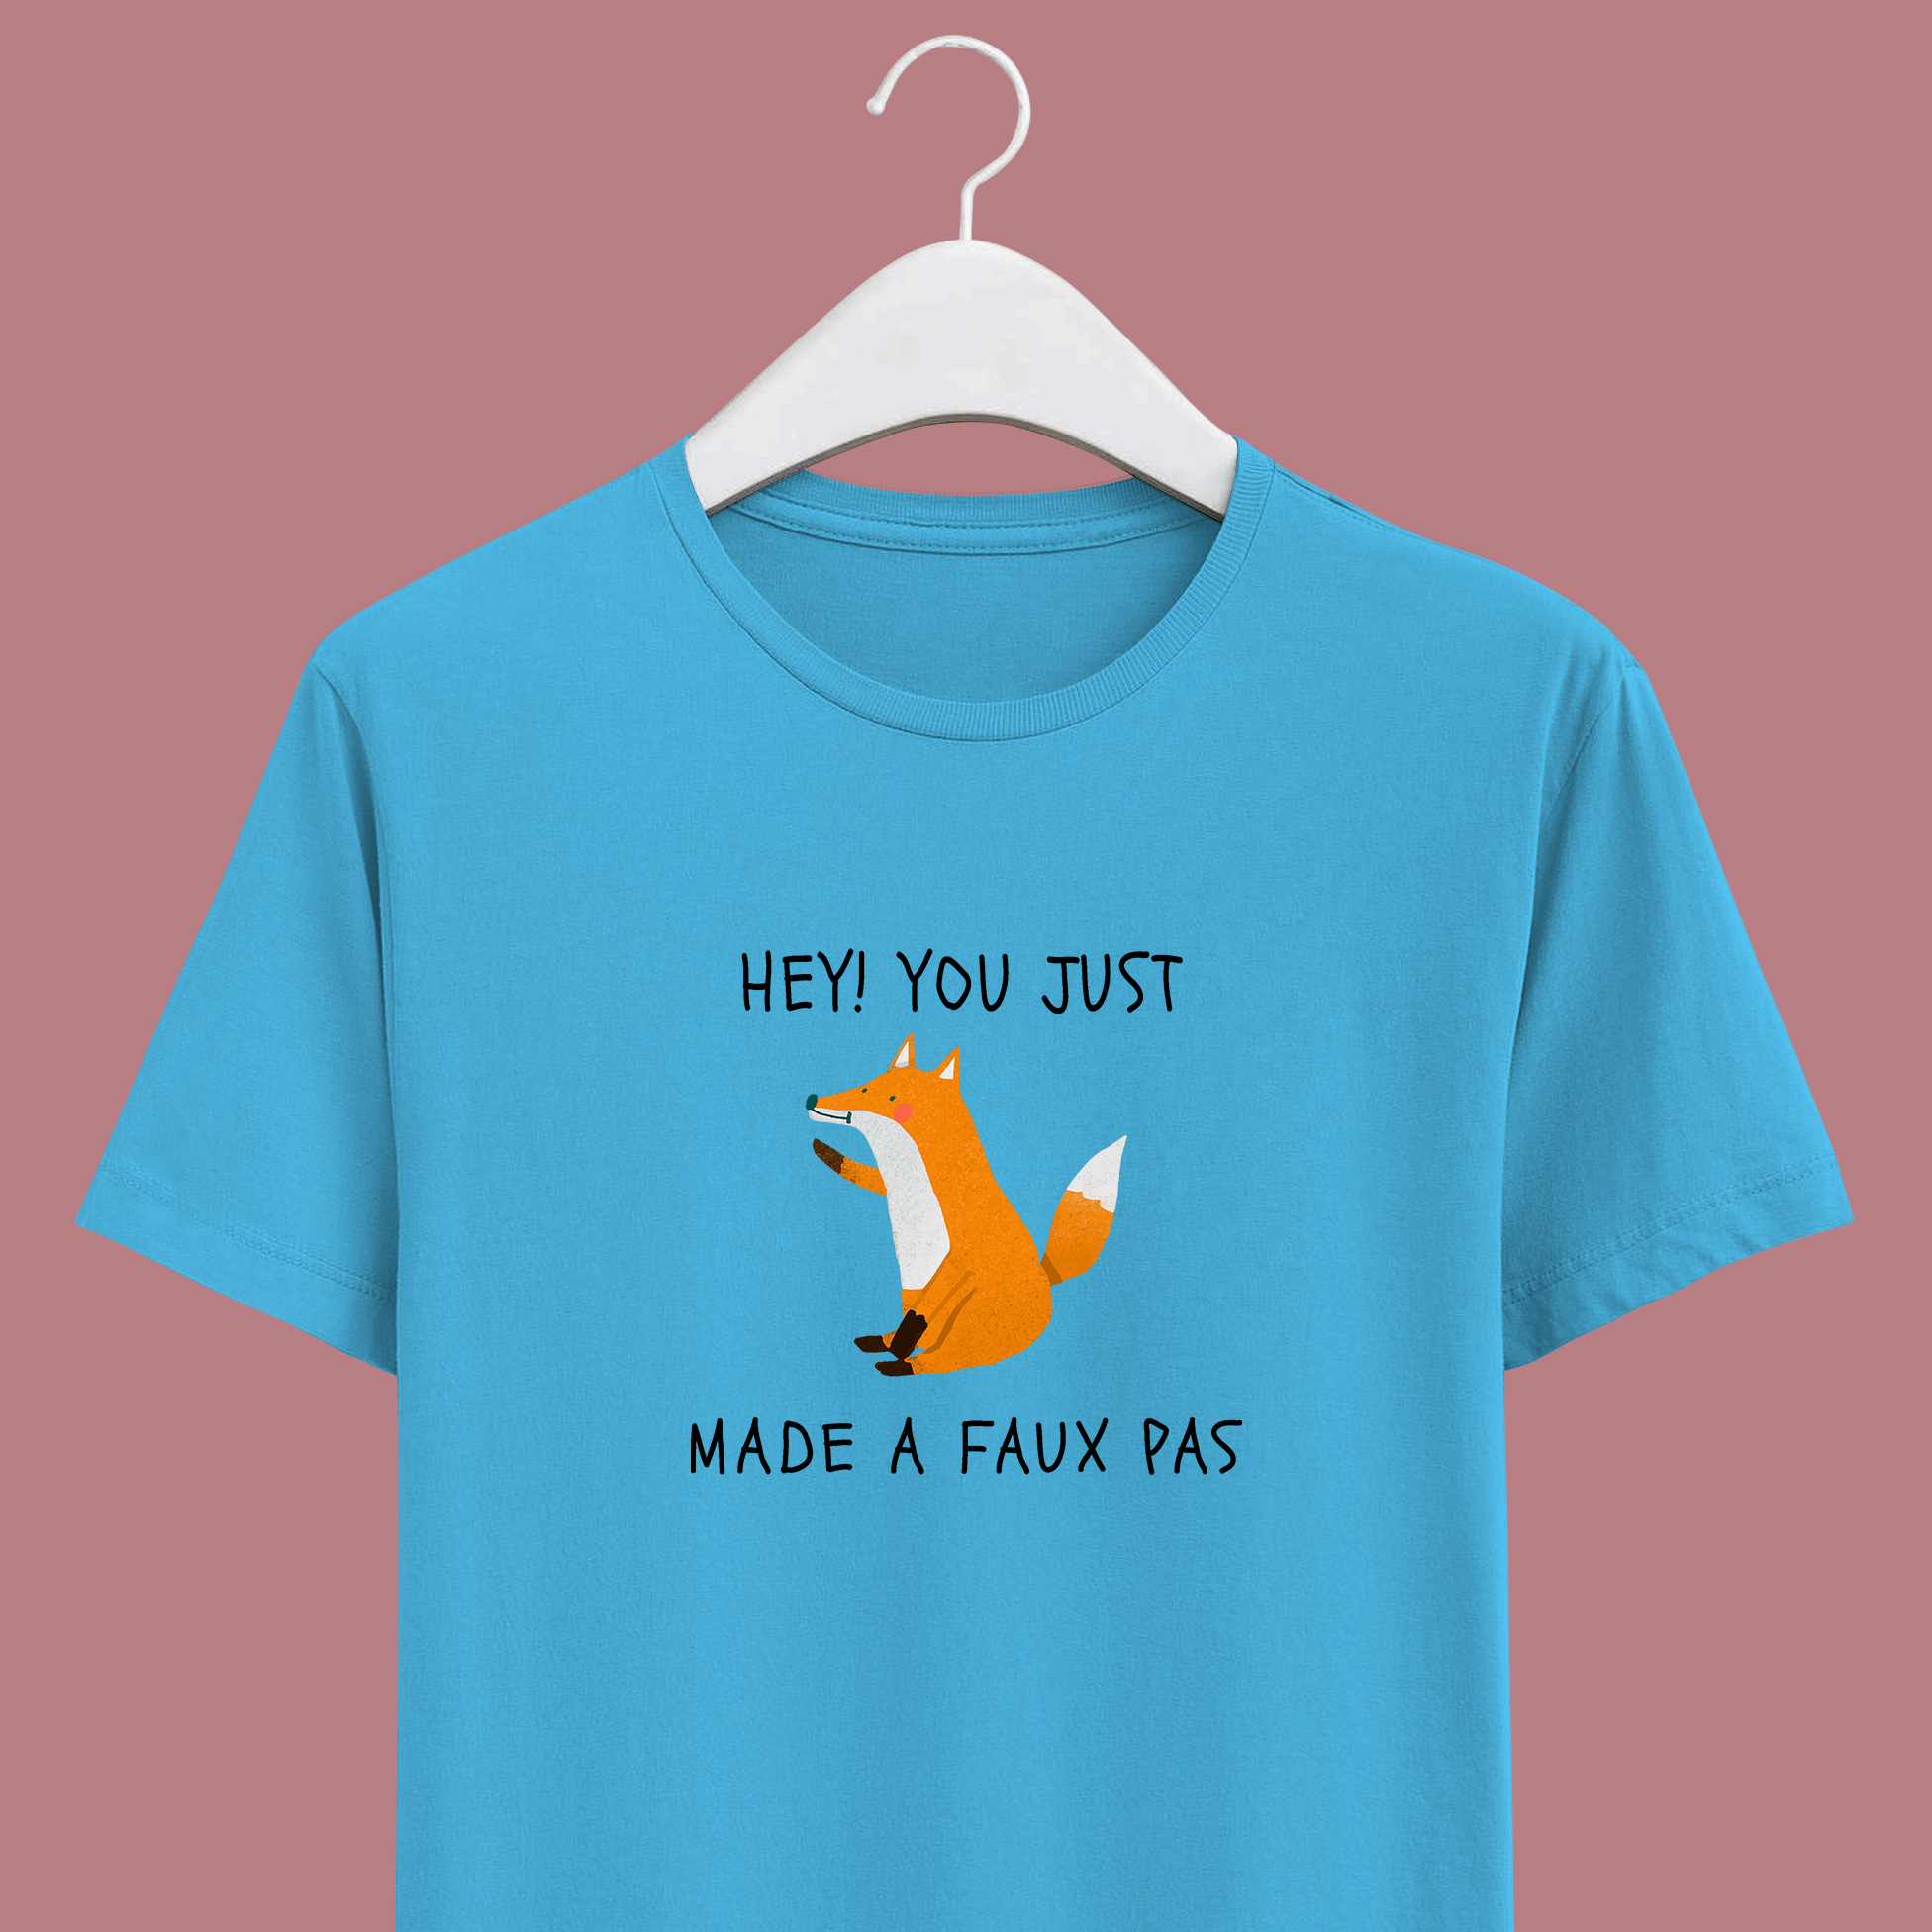 Joke on french word faux pas with orange sitting fox on sky blue cotton unisex t-shirt.